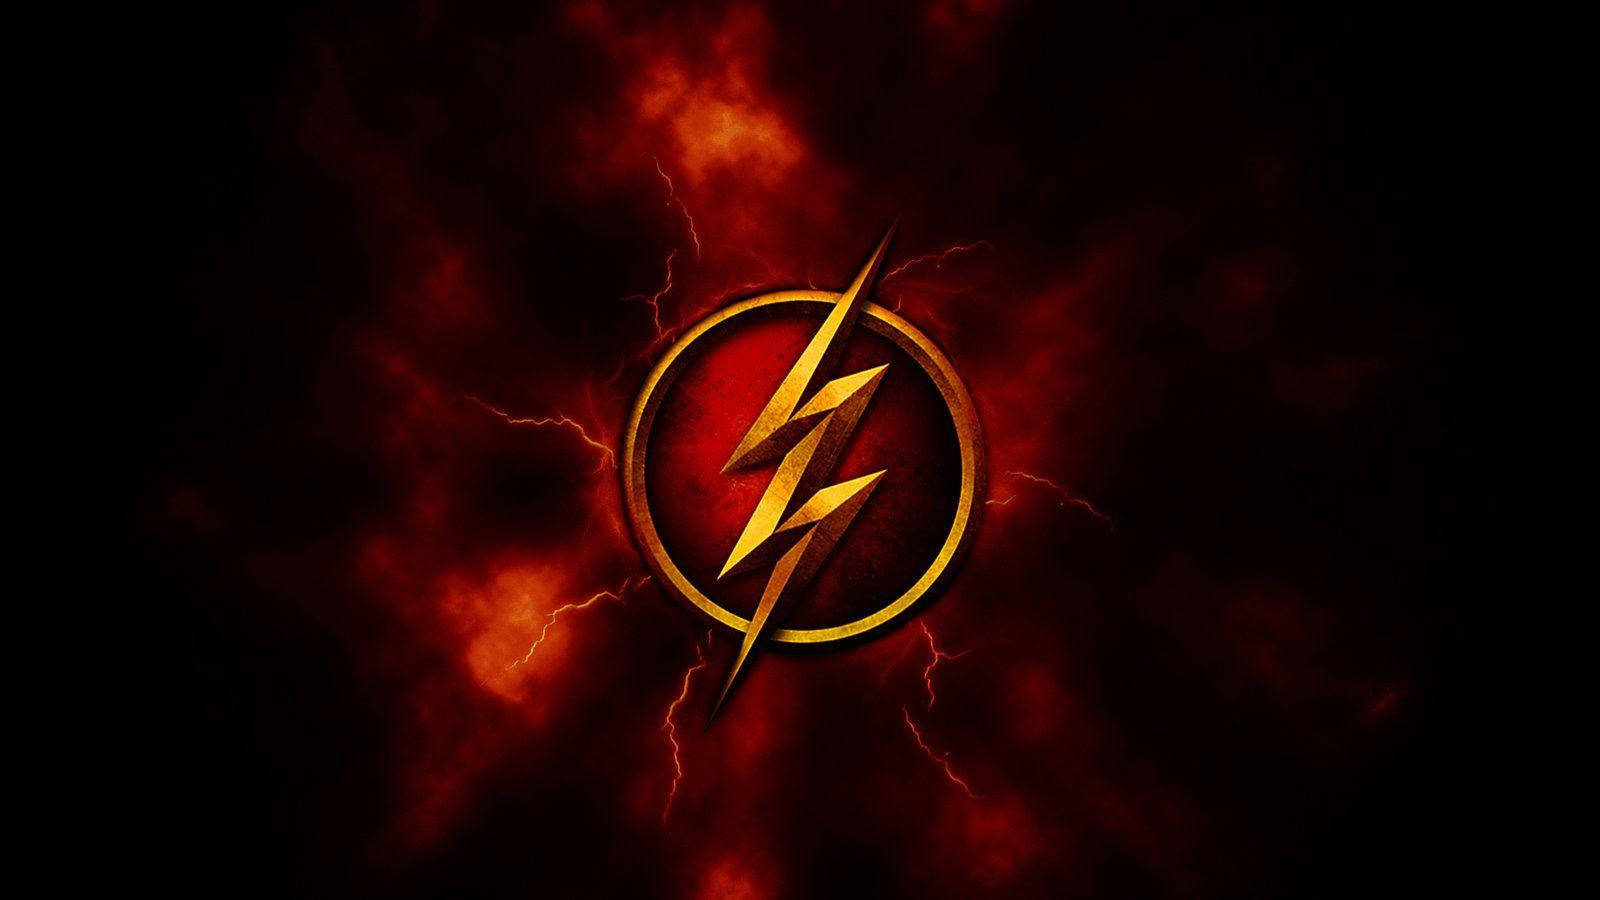 The Flash Cool Logos